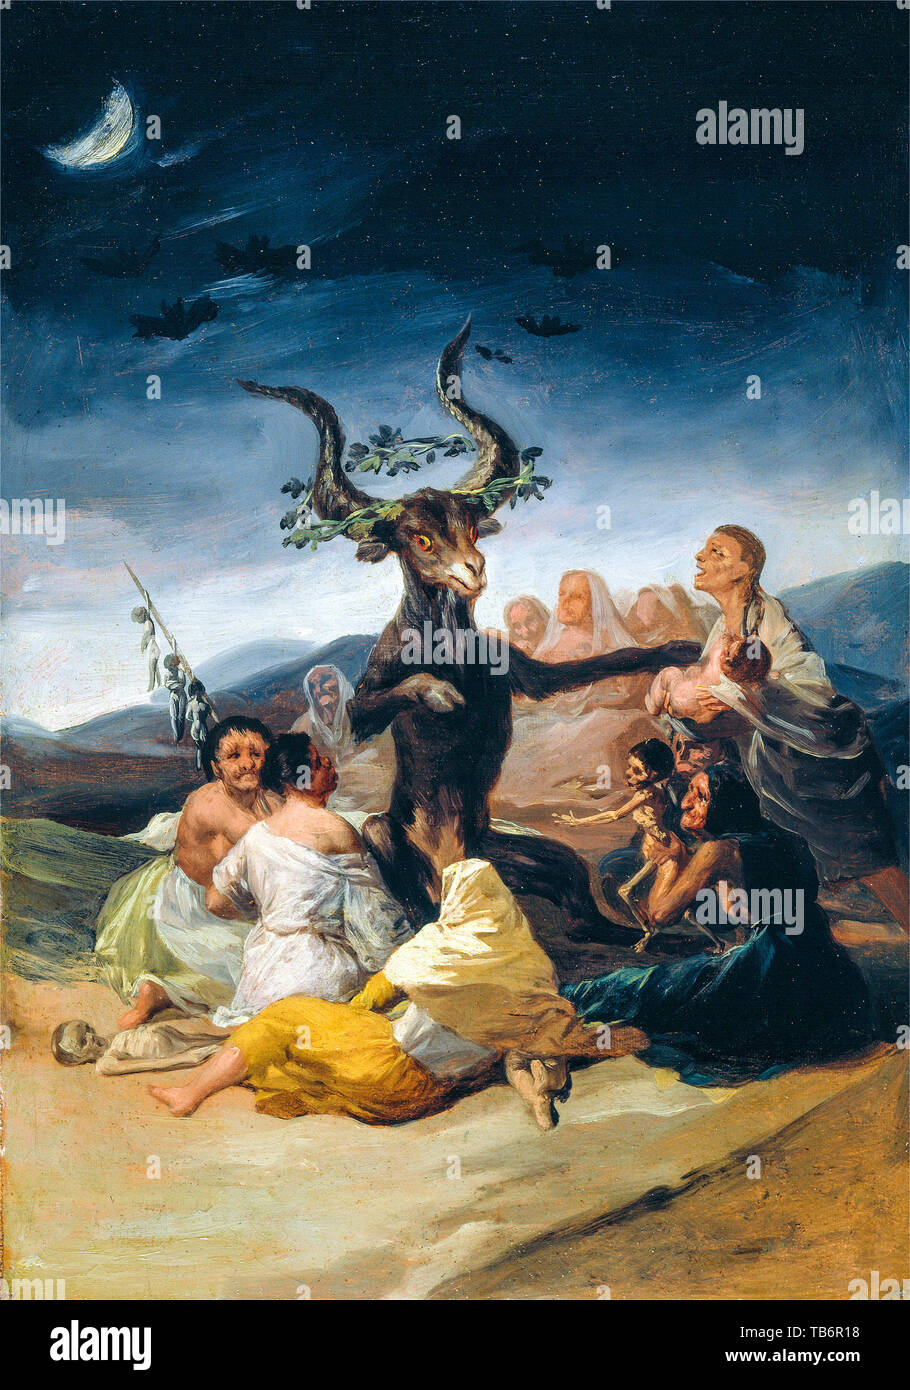 Francisco Goya, sabbat des sorcières, peinture, vers 1797 Banque D'Images